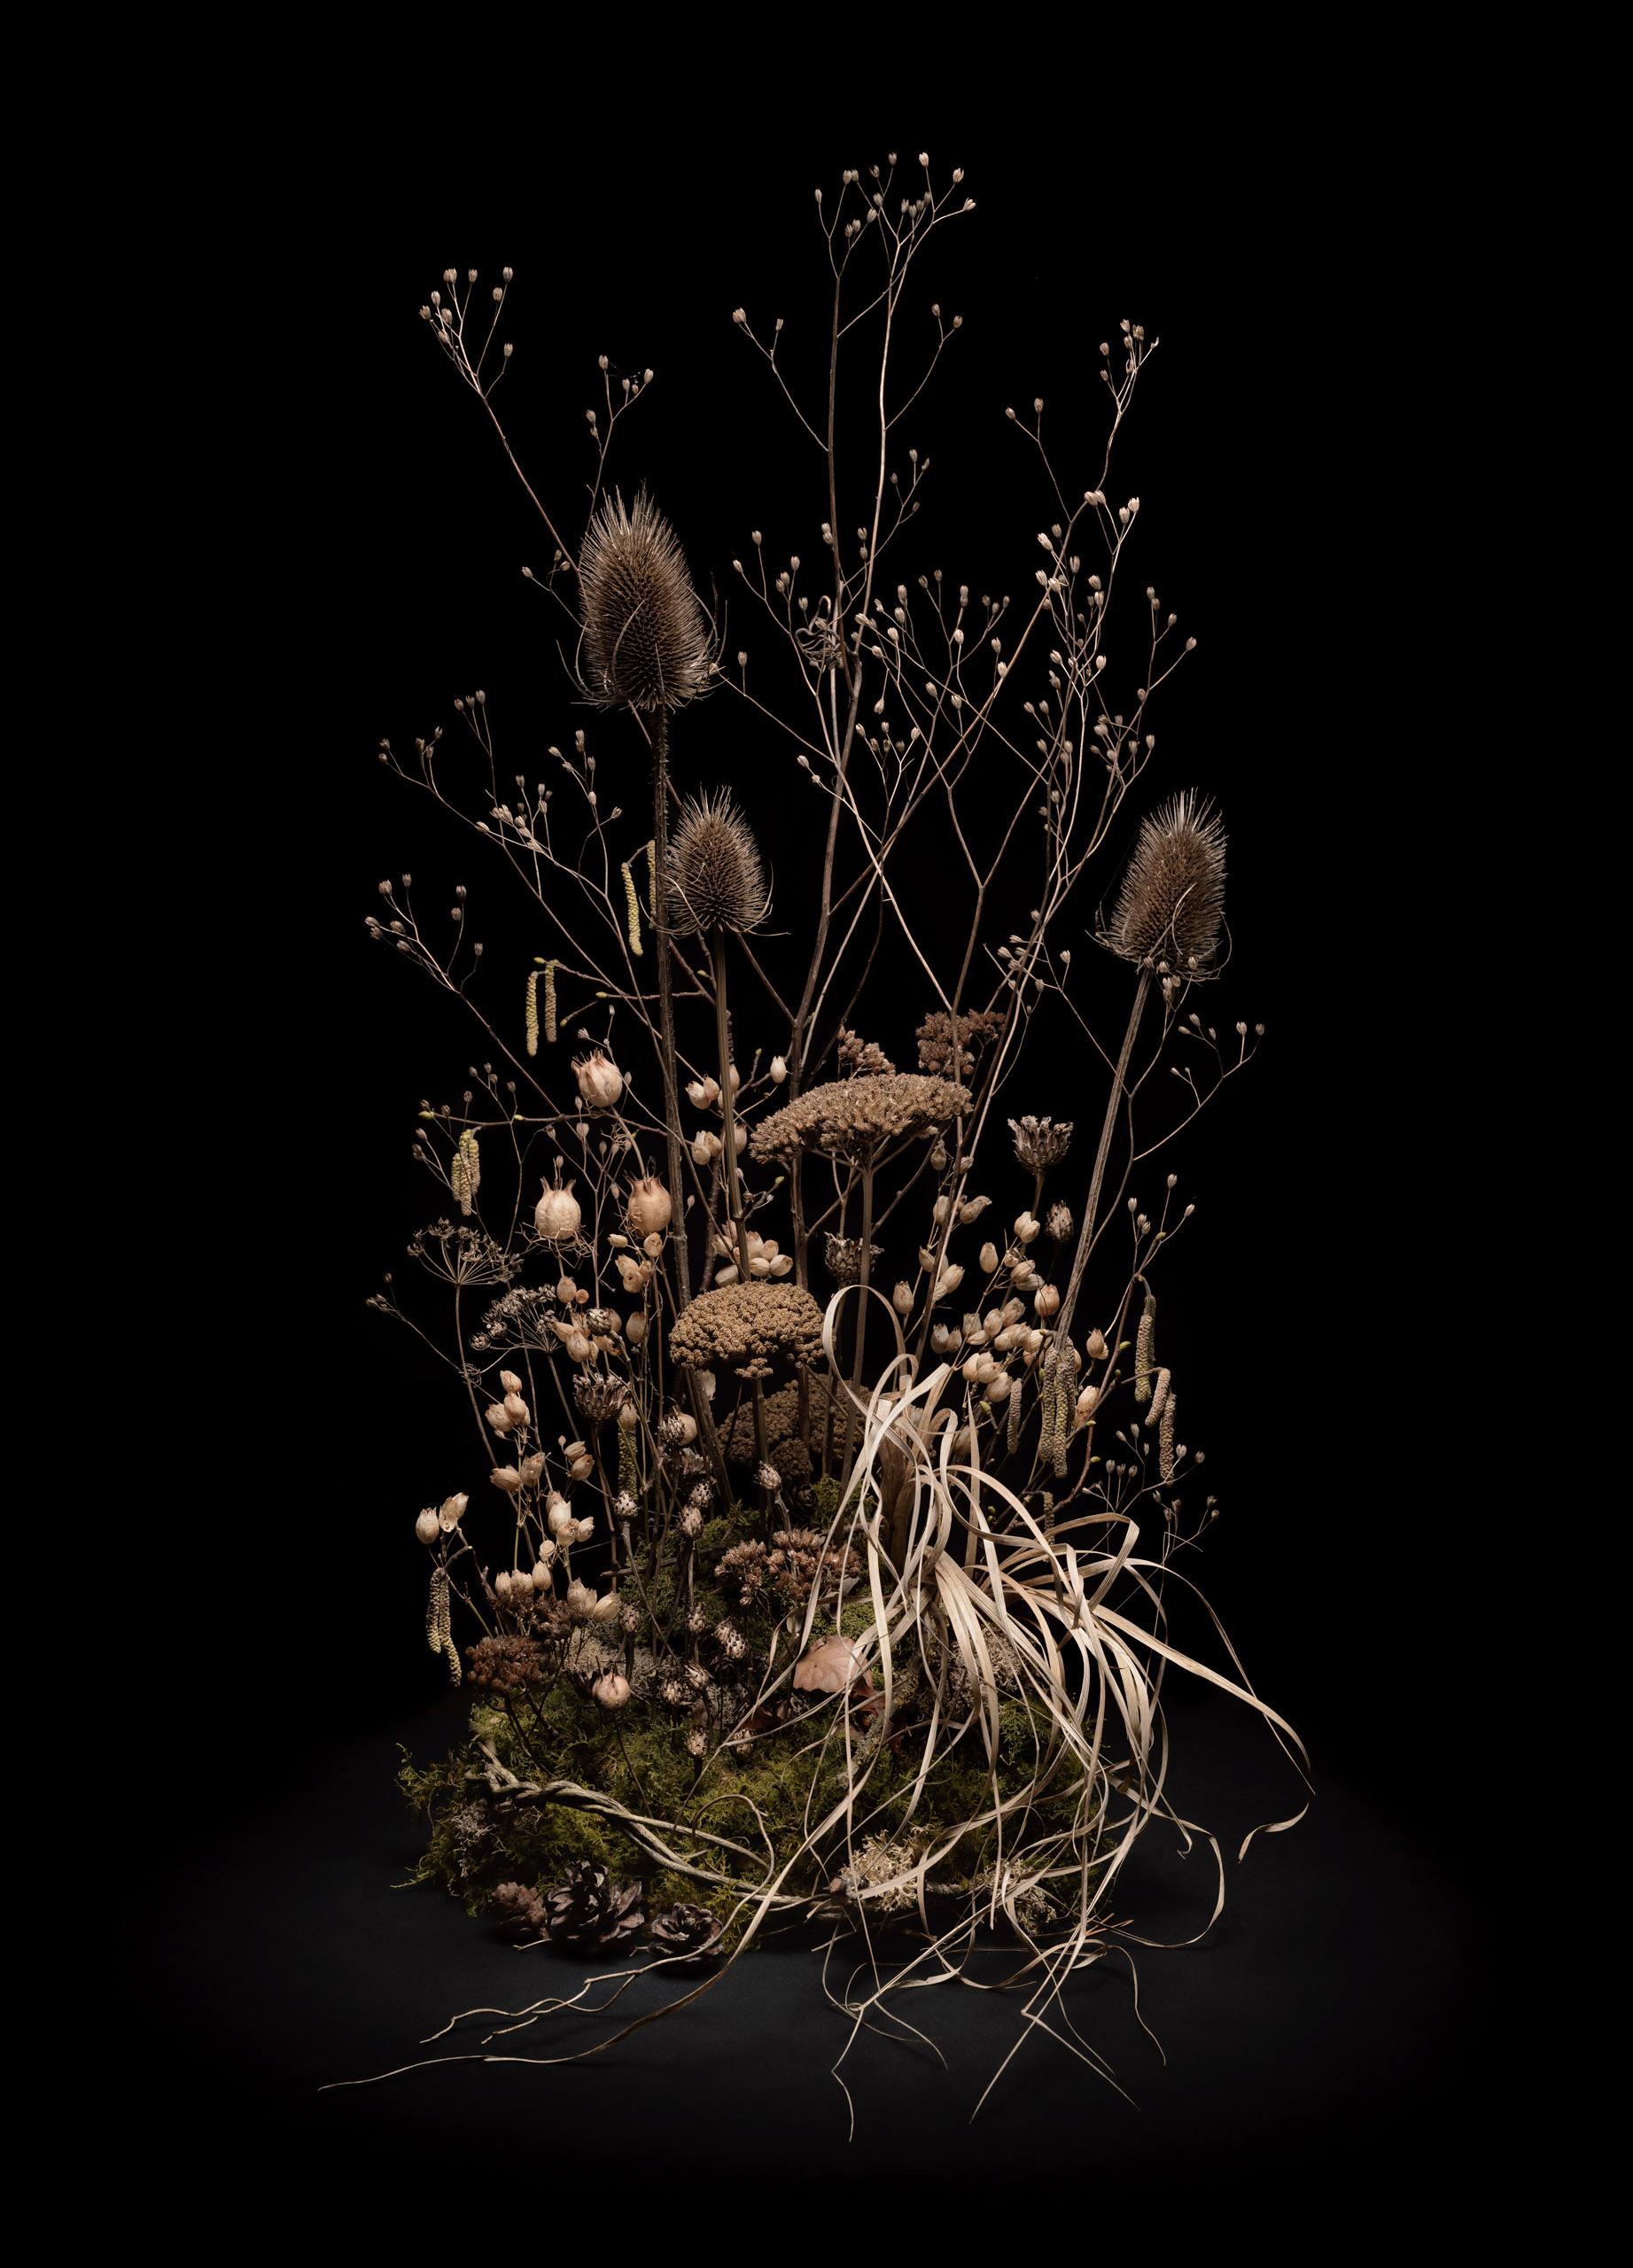 Still-Life Photograph Jasper Goodall - Flora foncée n°8, Skeletons of the Summer 